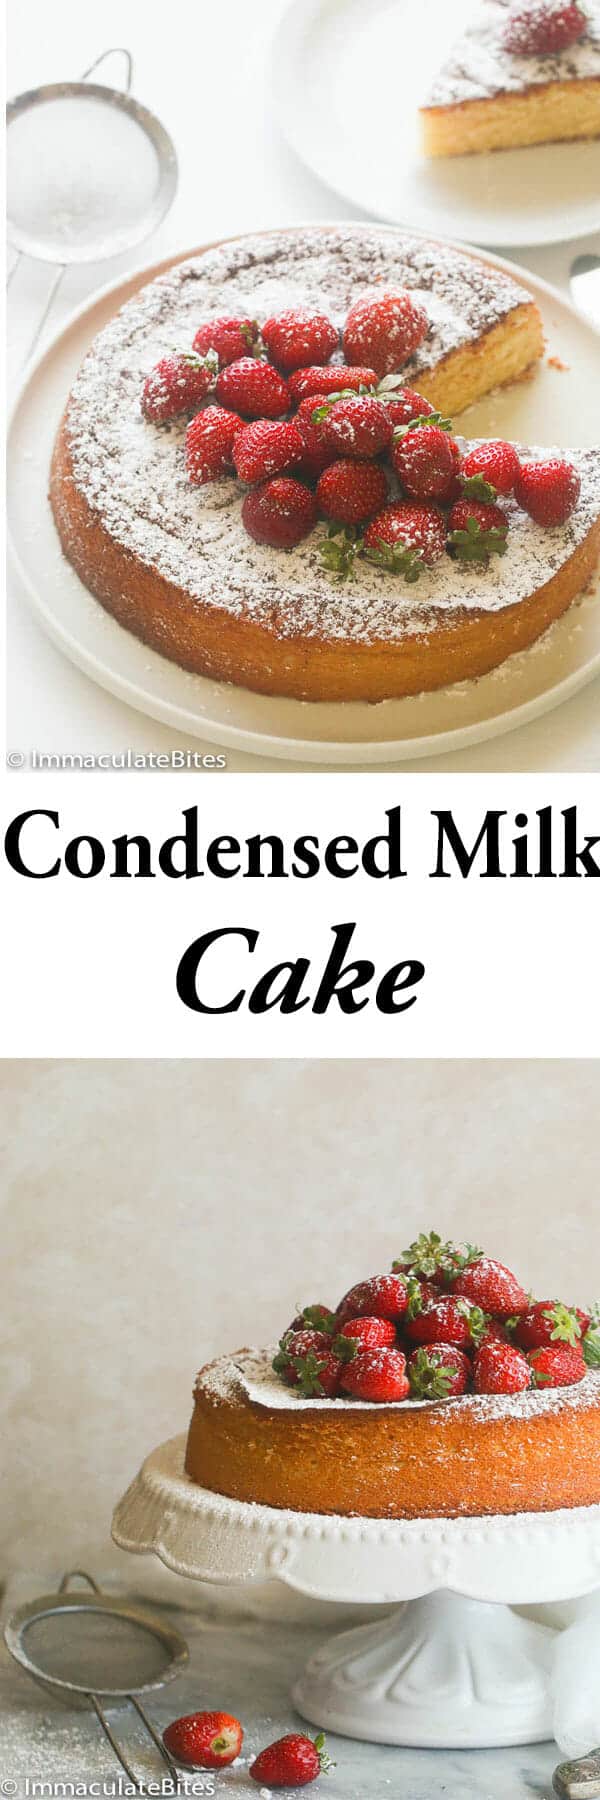 Condensed milk pound cake